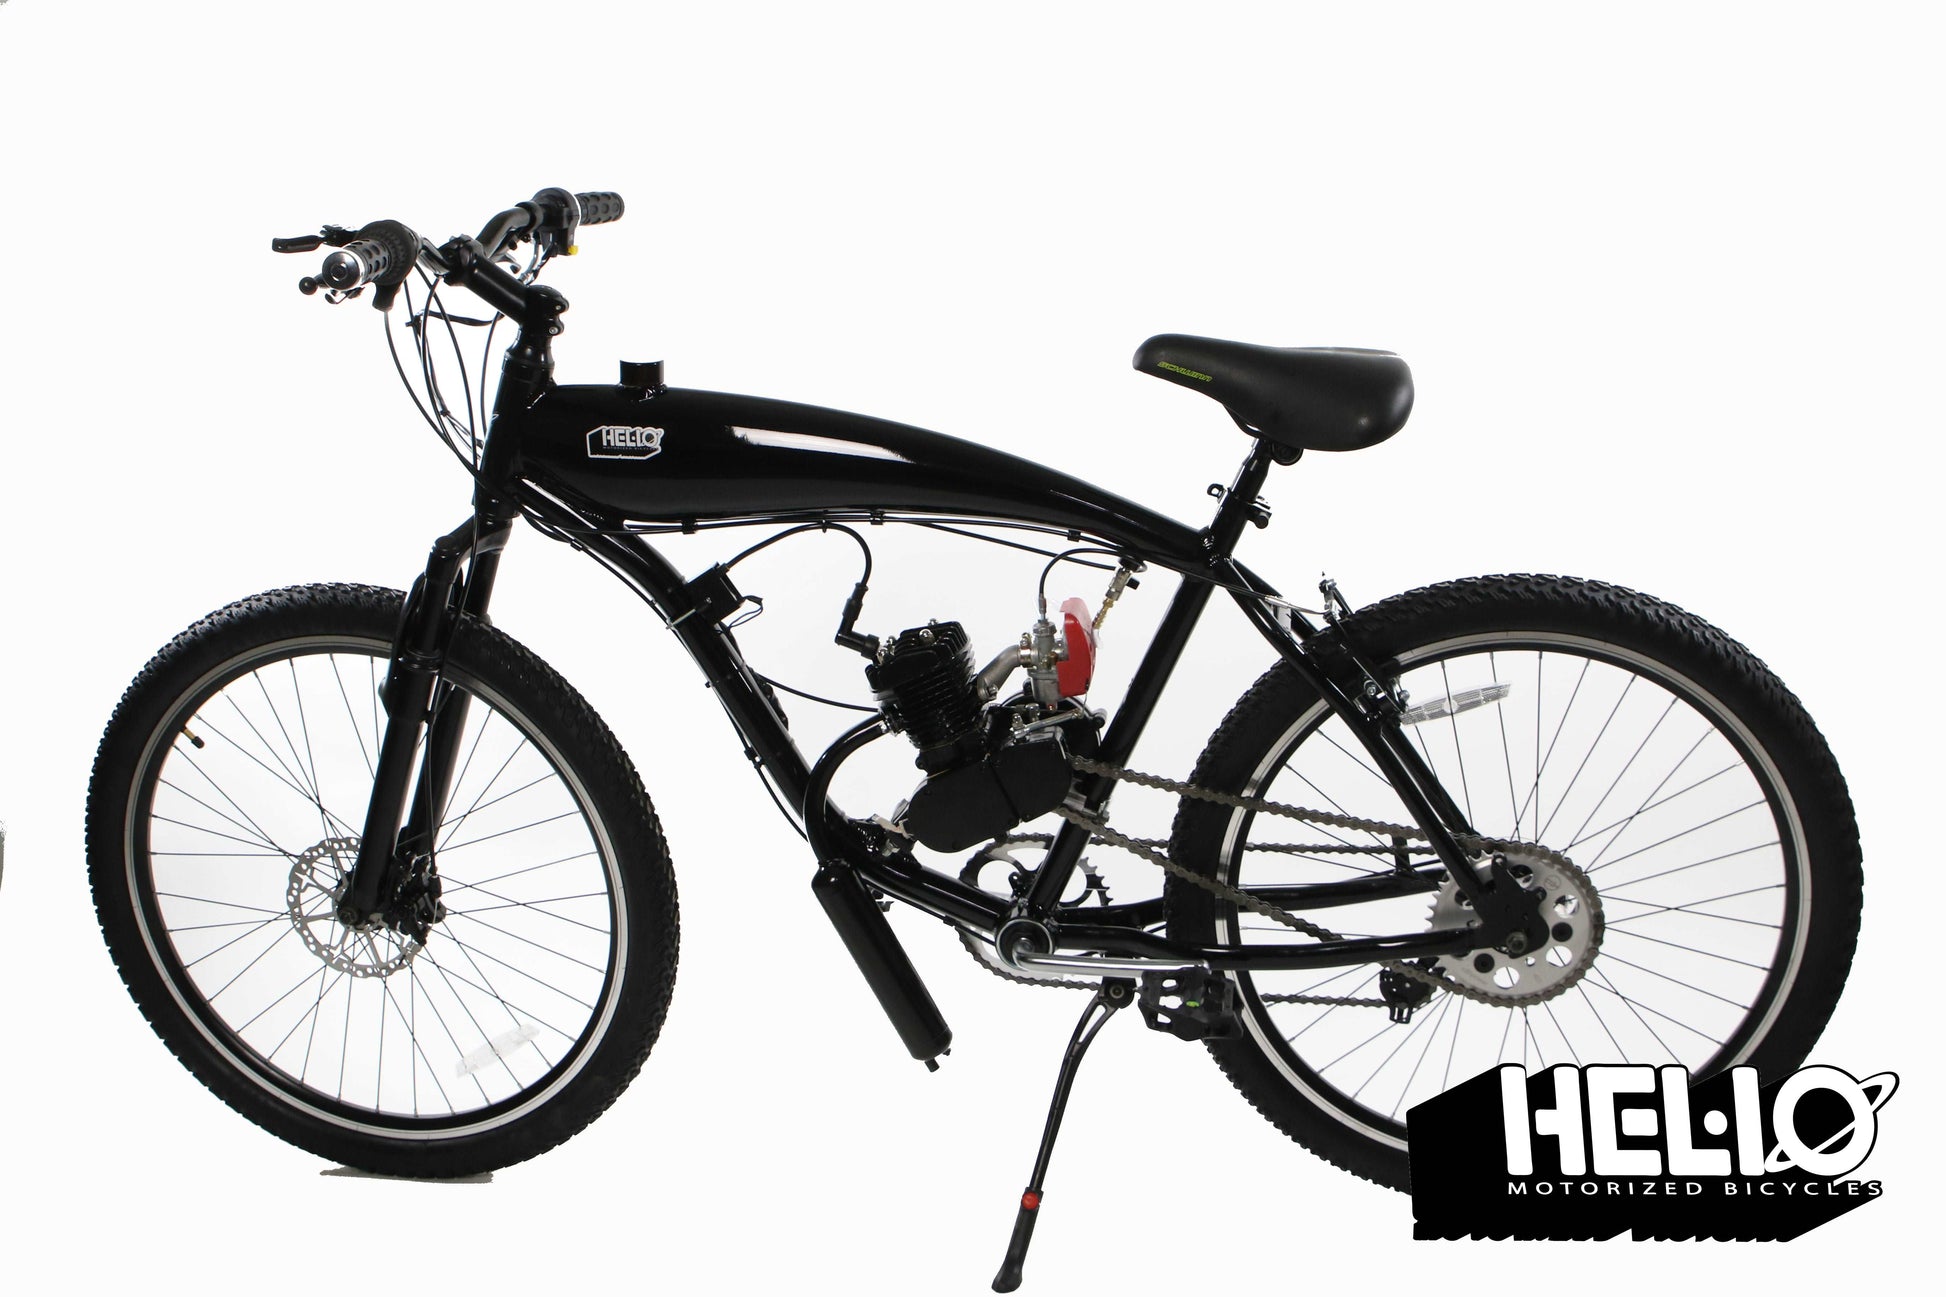 Series 43 2 Stroke Motorized Bicycle